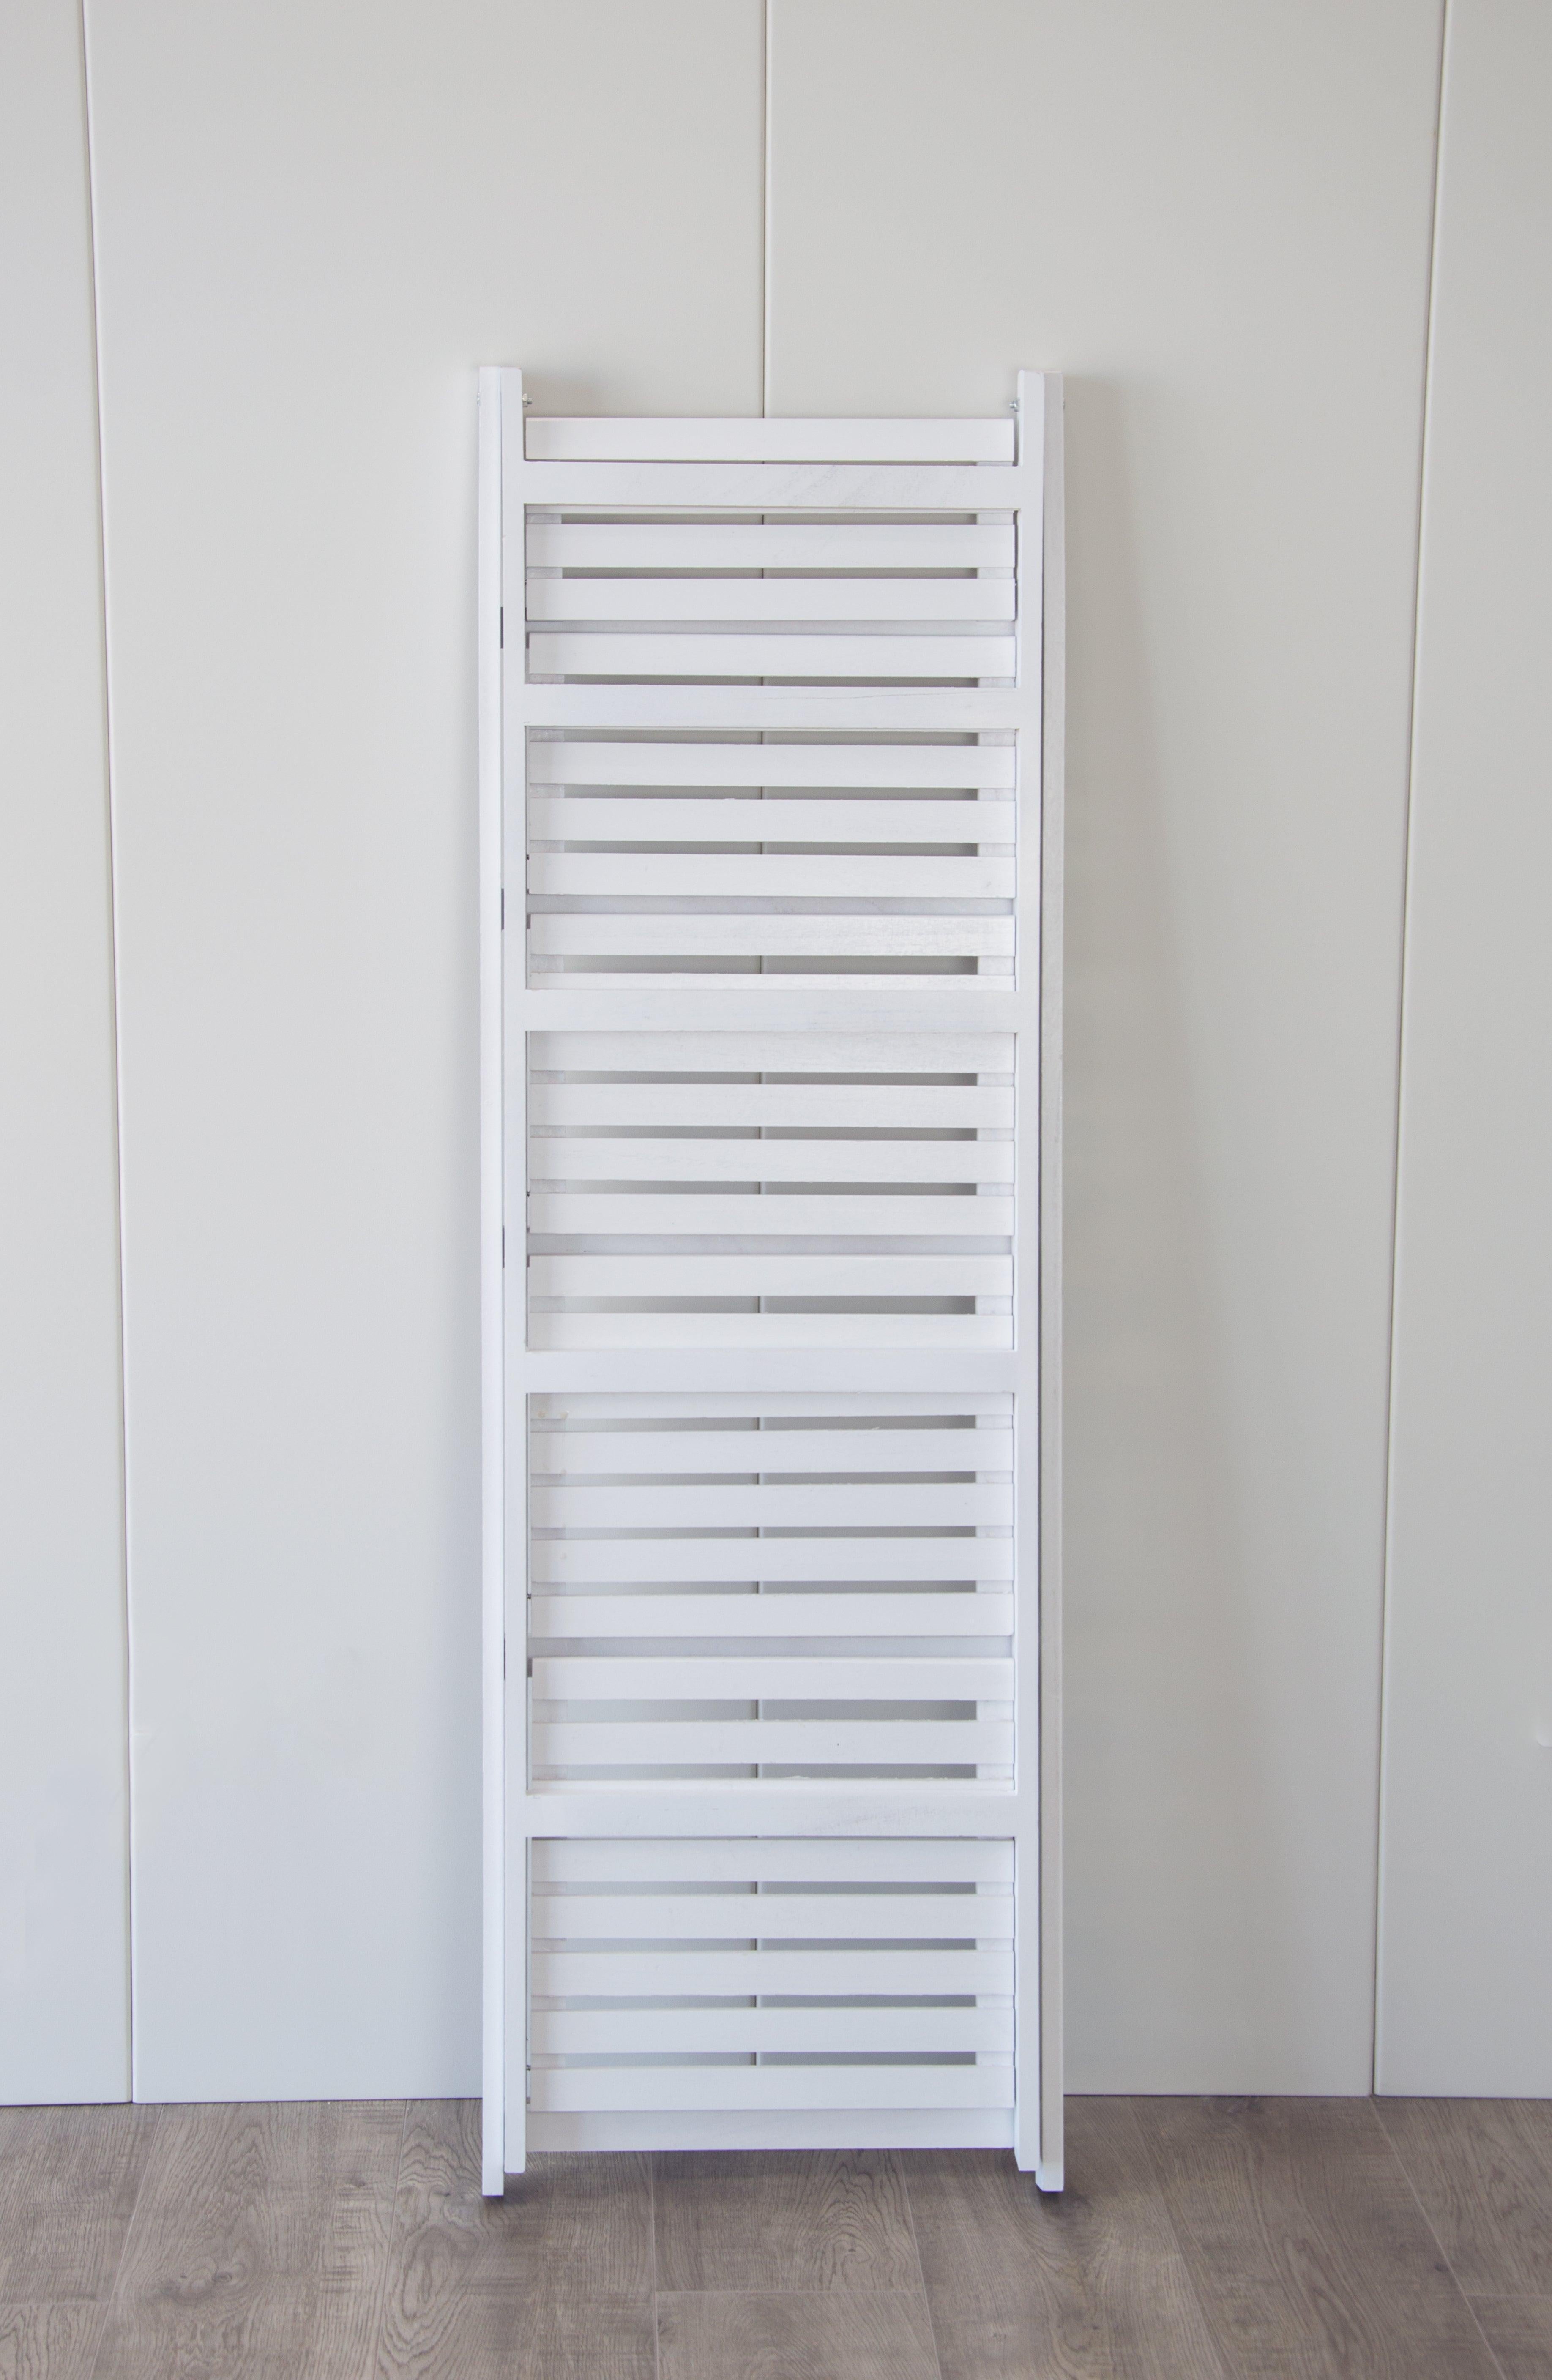 5 Tier Wooden Ladder Shelf Stand Storage Book Shelves Shelving Display Rack Deals499